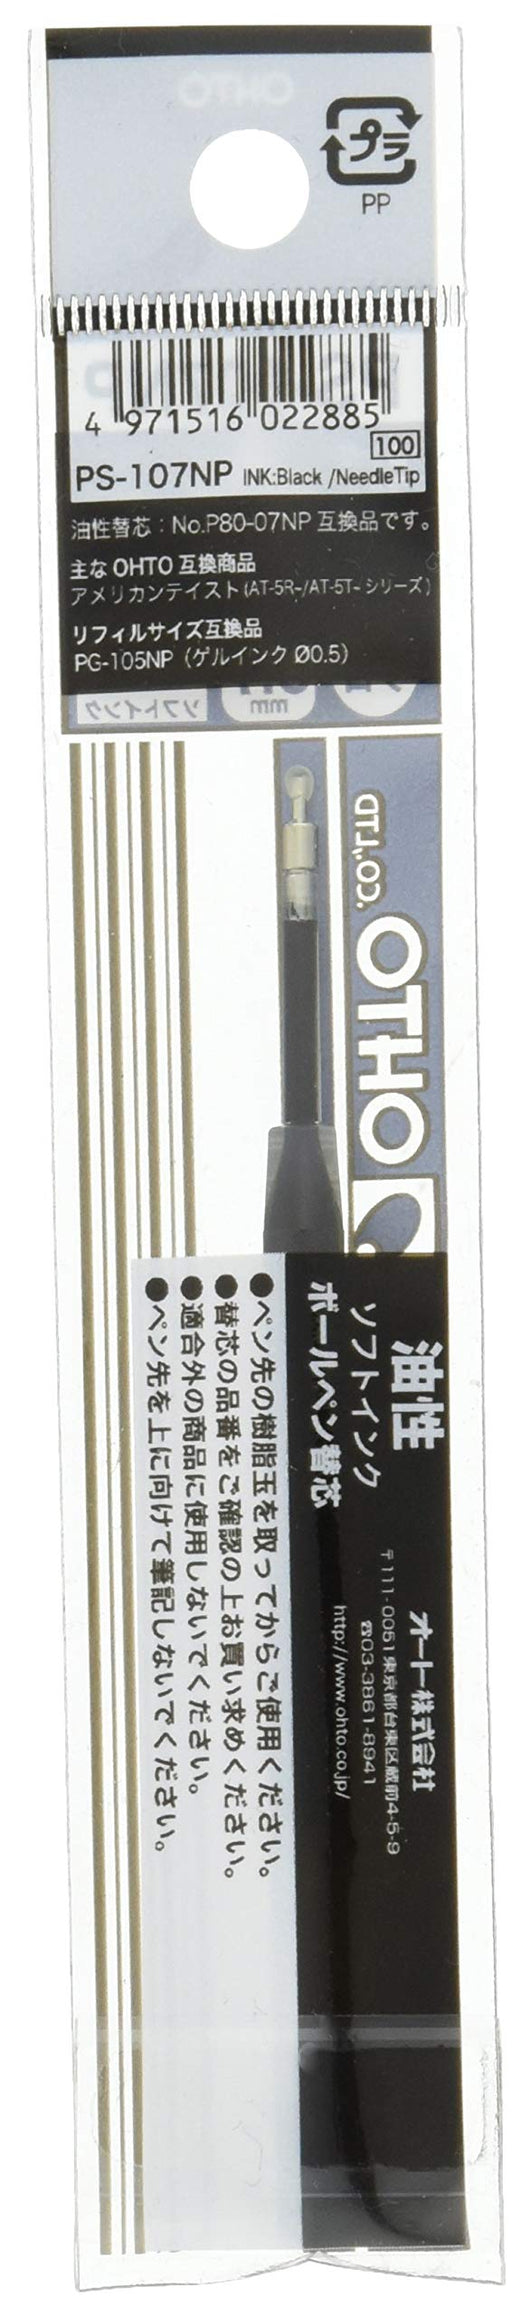 OHTO BallpointPen Refill Oil Based 0.7mm 5P Box PS-107NPBlack/5P Made in Japan_2